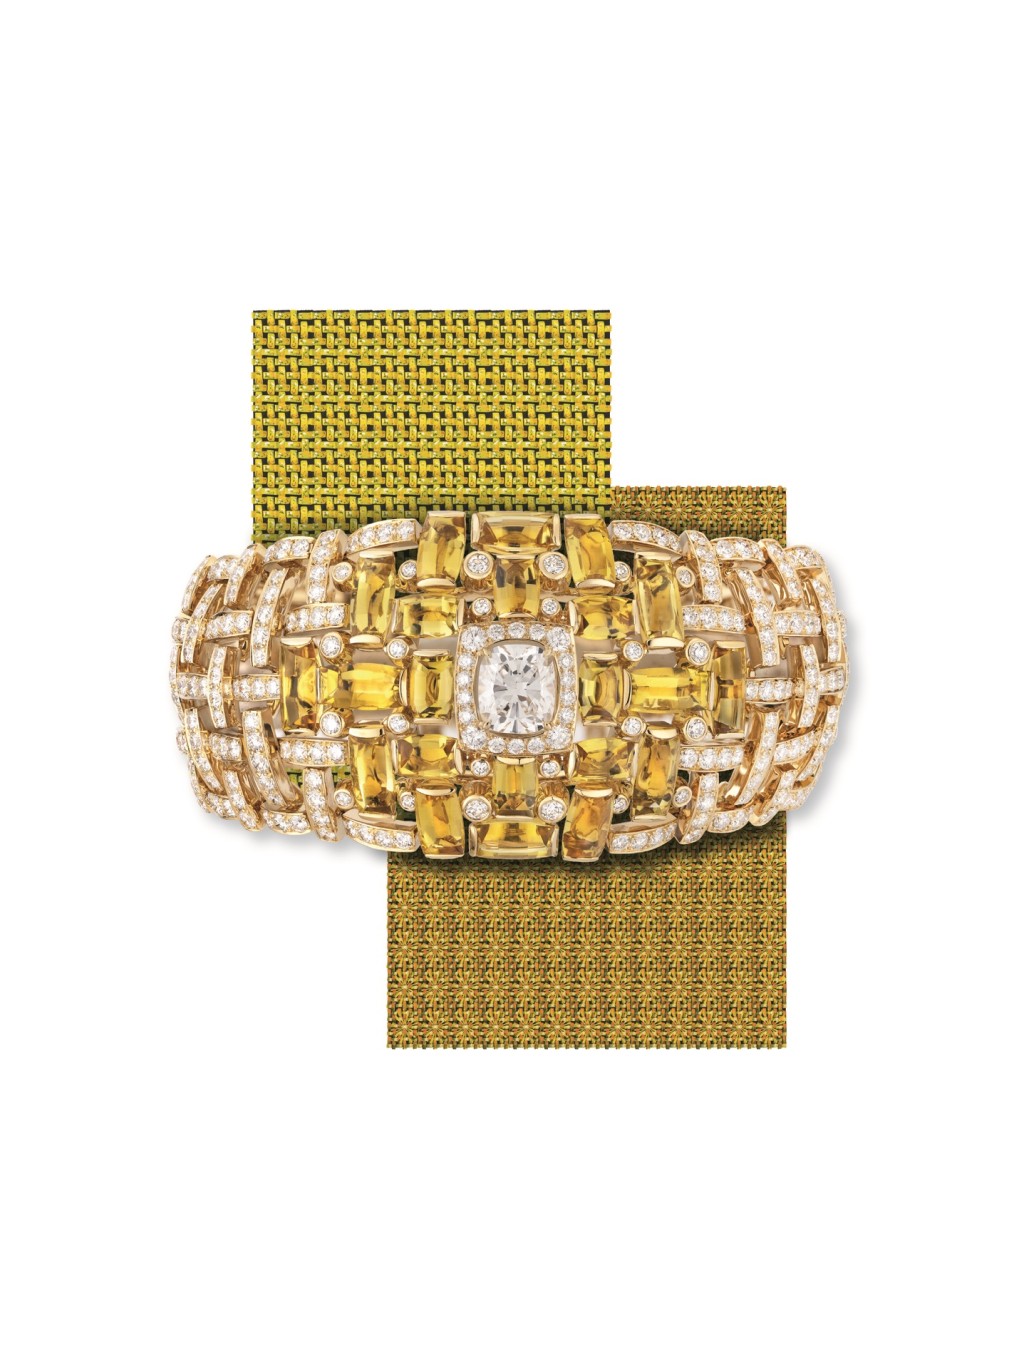 Tweed Byzance黄金拼钻石及绿柱石手链。 